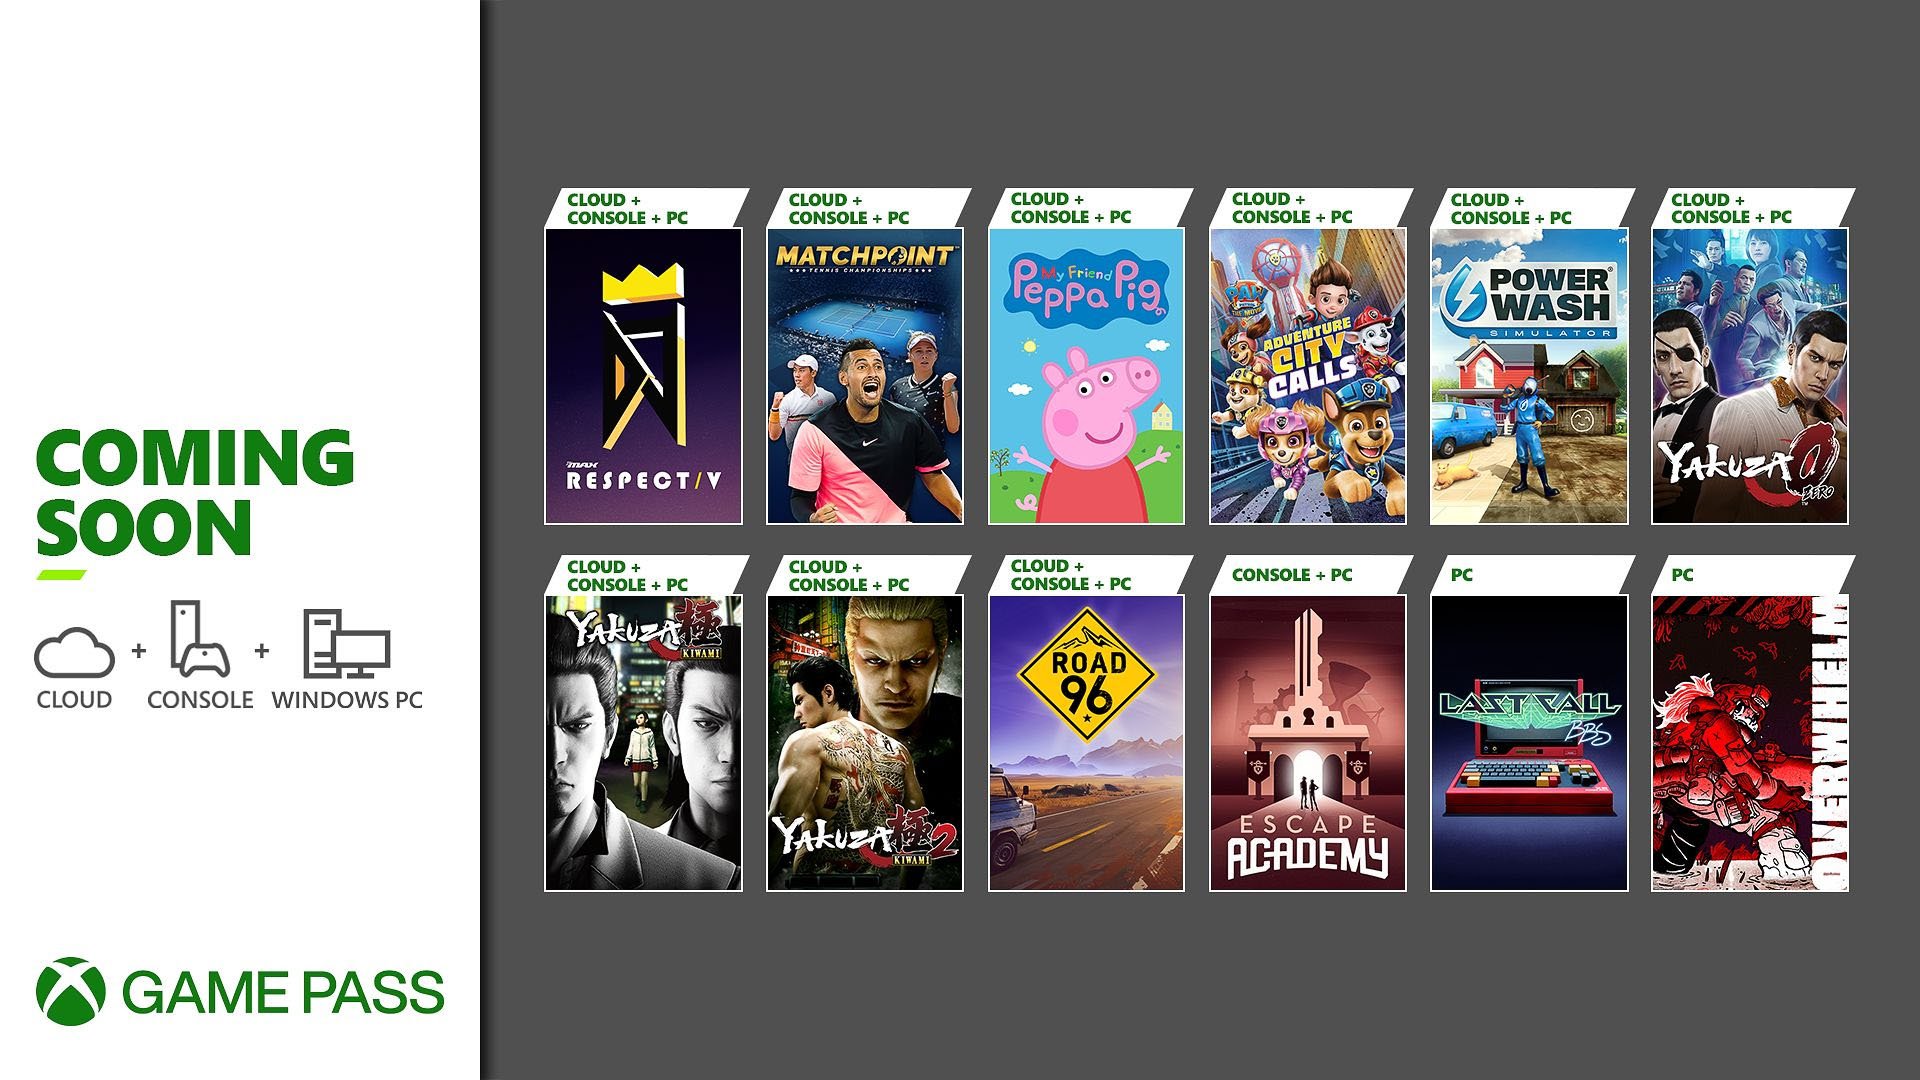 #
      Xbox Game Pass adds DJMAX Respect V, PowerWash Simulator, Yakuza 0, Kiwami, Kiwami 2, and more in early July